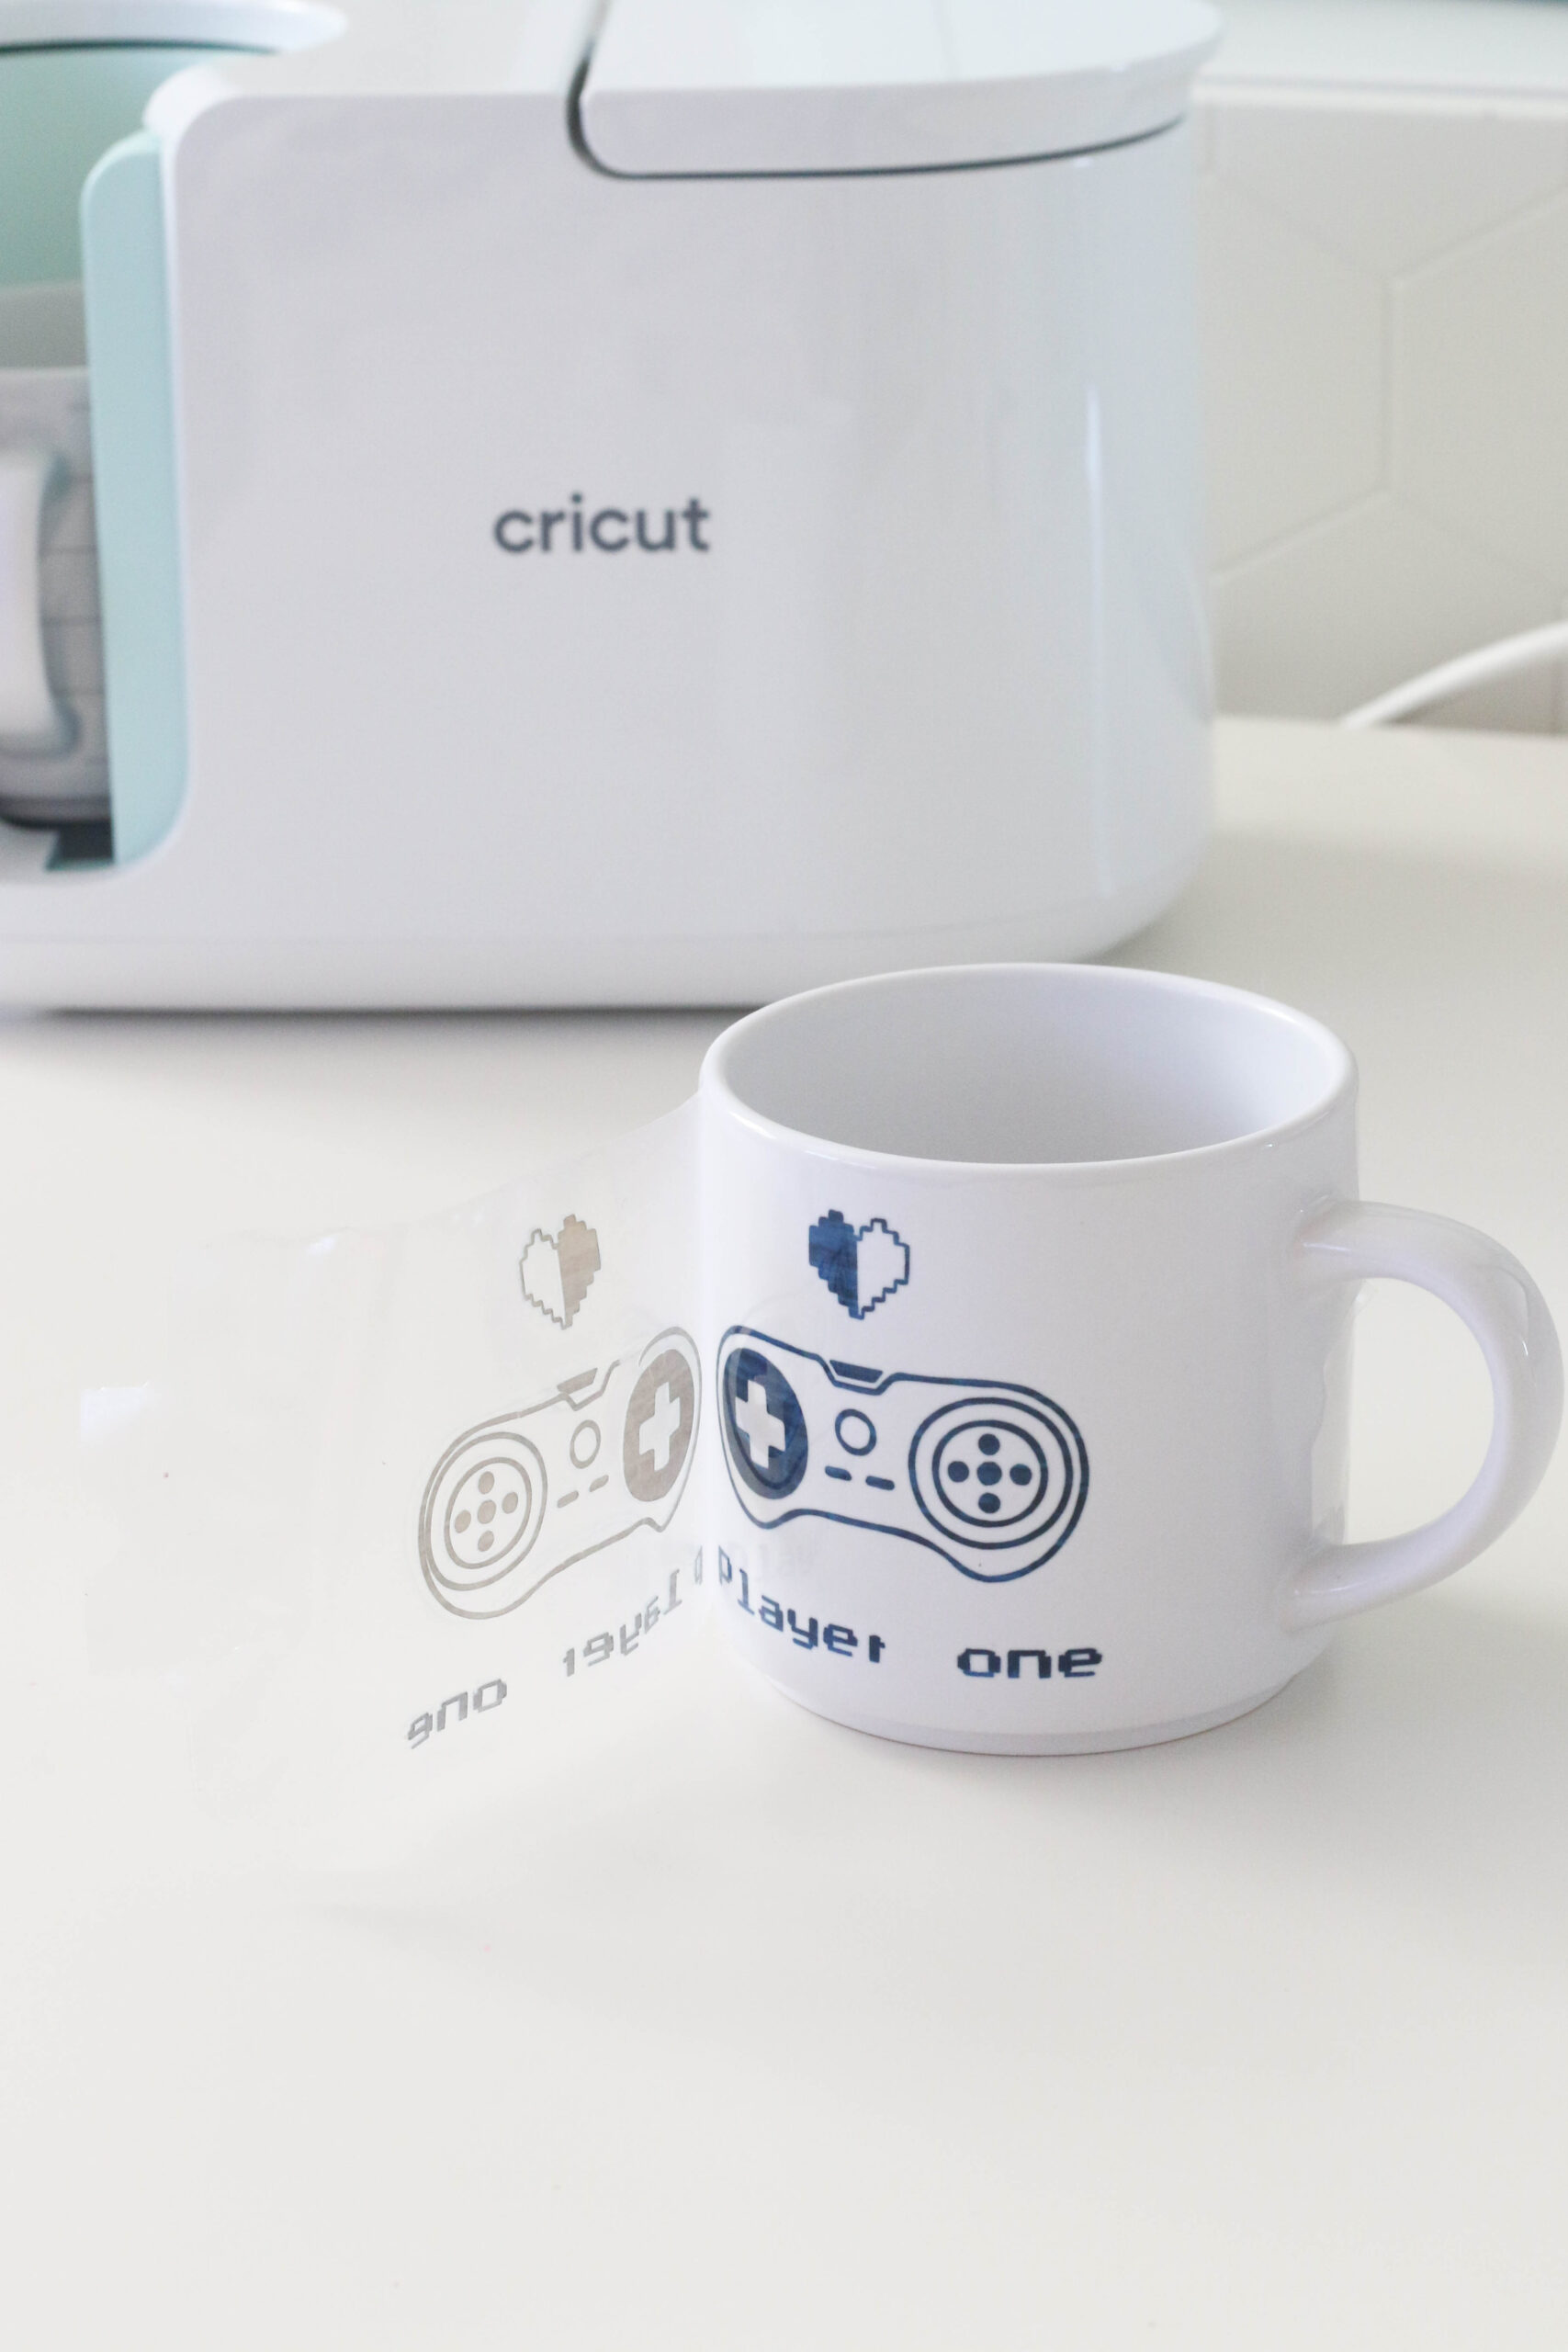 How to Make a Personalized Mug with Cricut Mug Press » The Denver Housewife